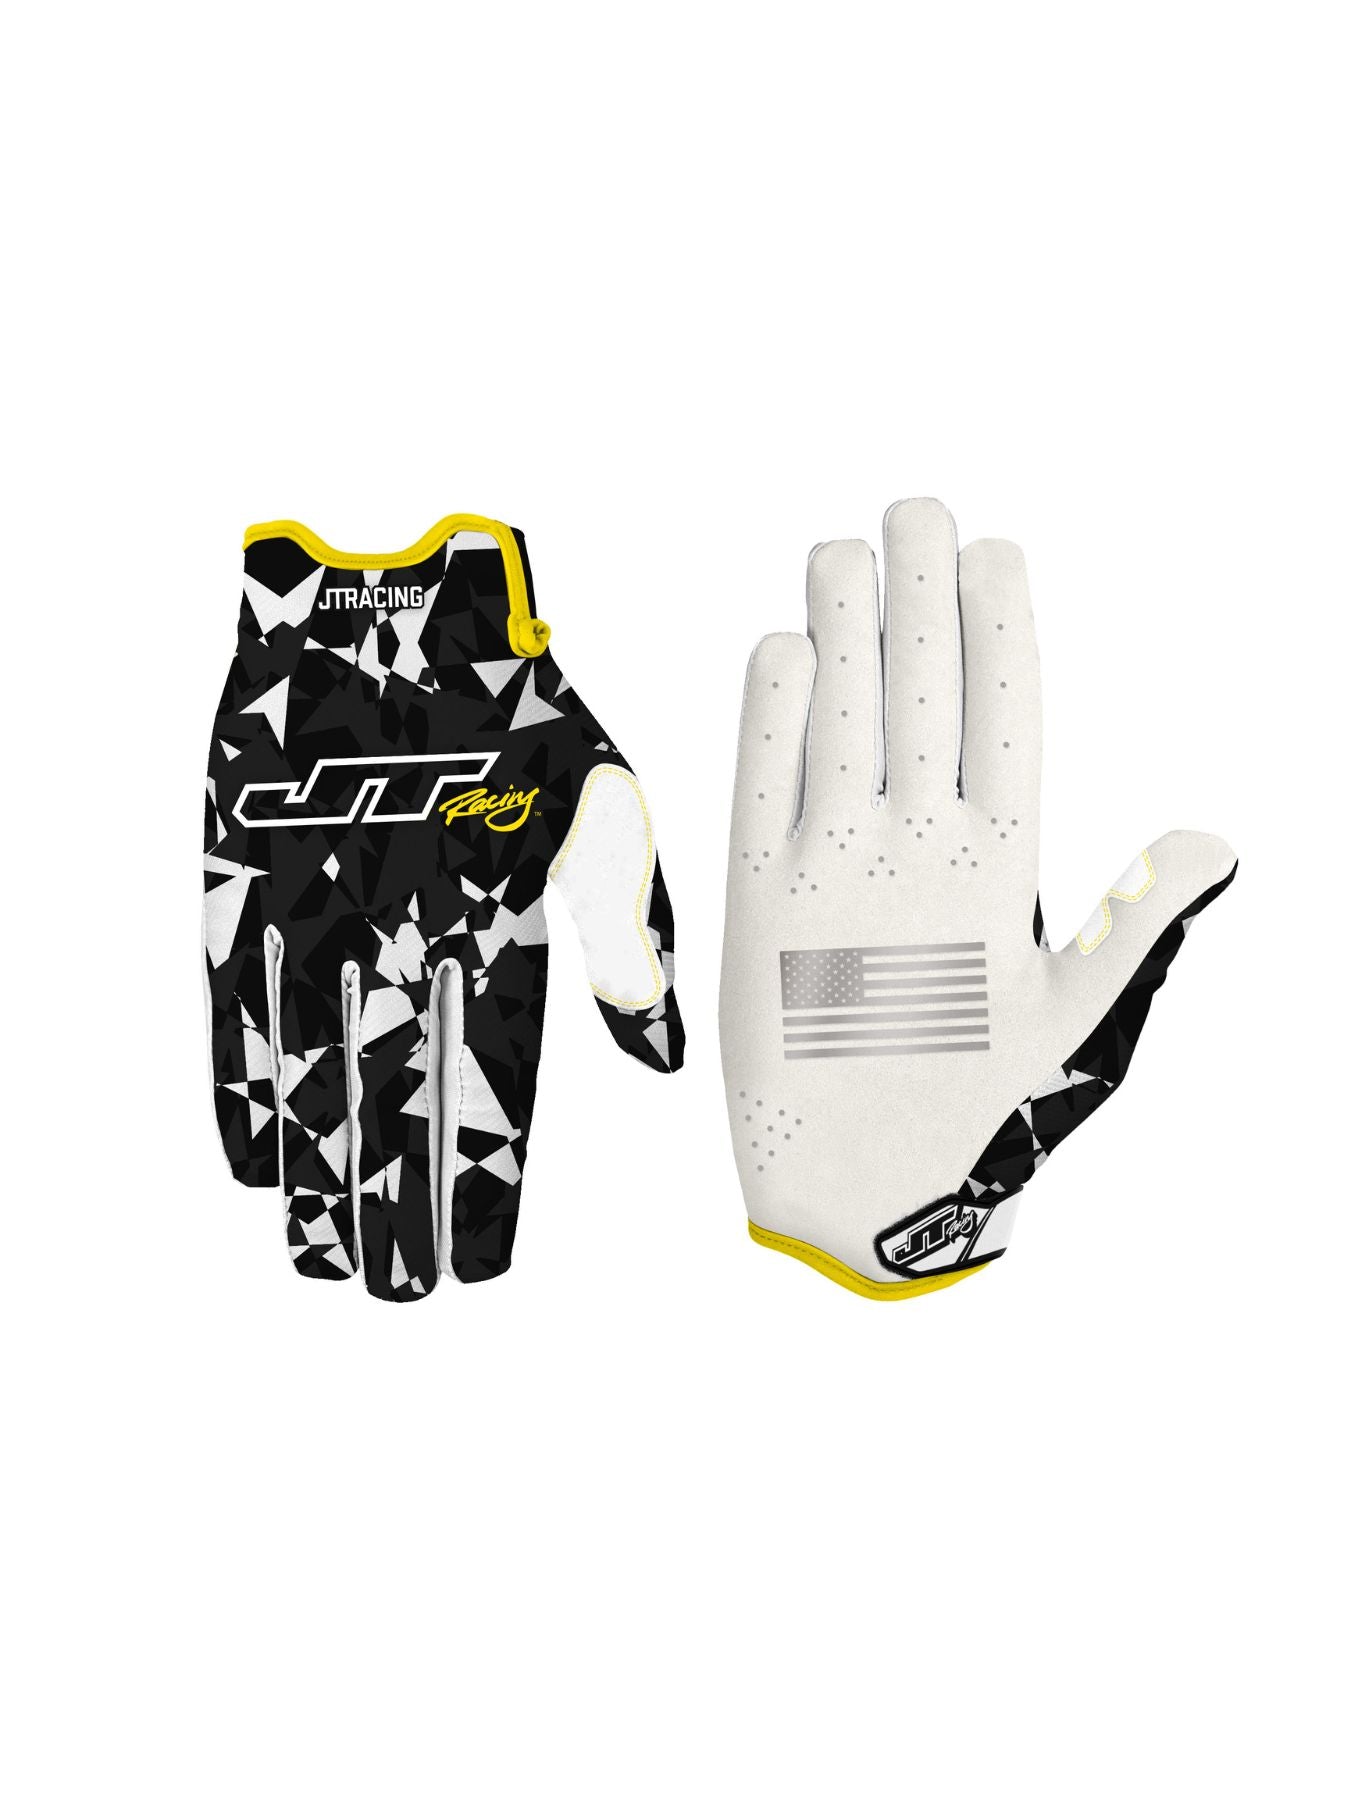 JT Racing Pro Lite Racing Gloves